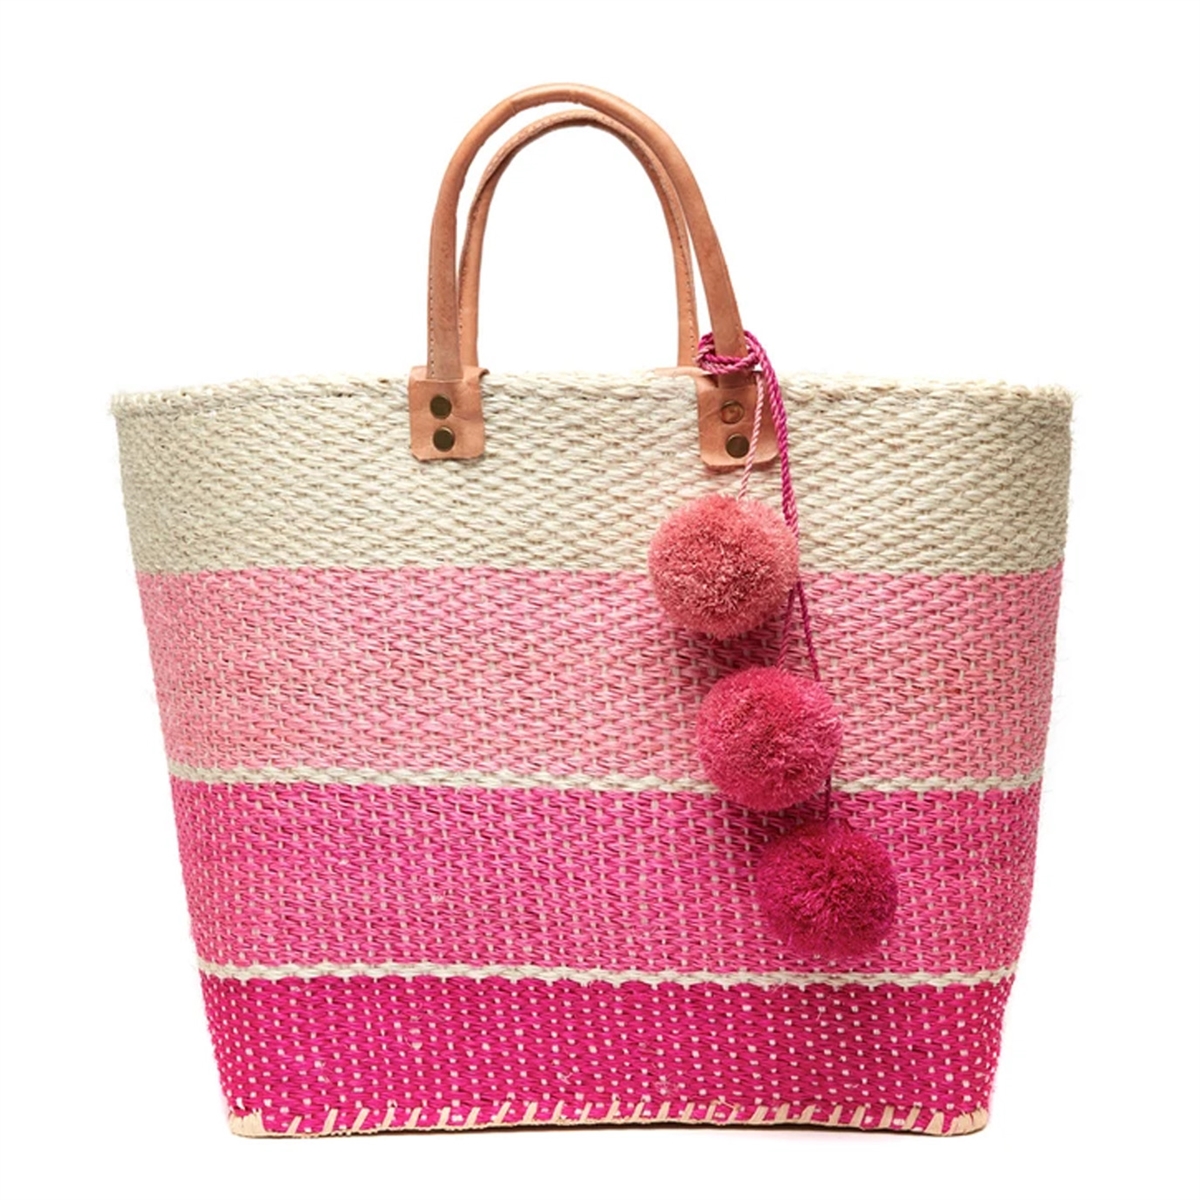 Melanga Straw Tote Bag with Waterfall Pompoms Charm Embellishment